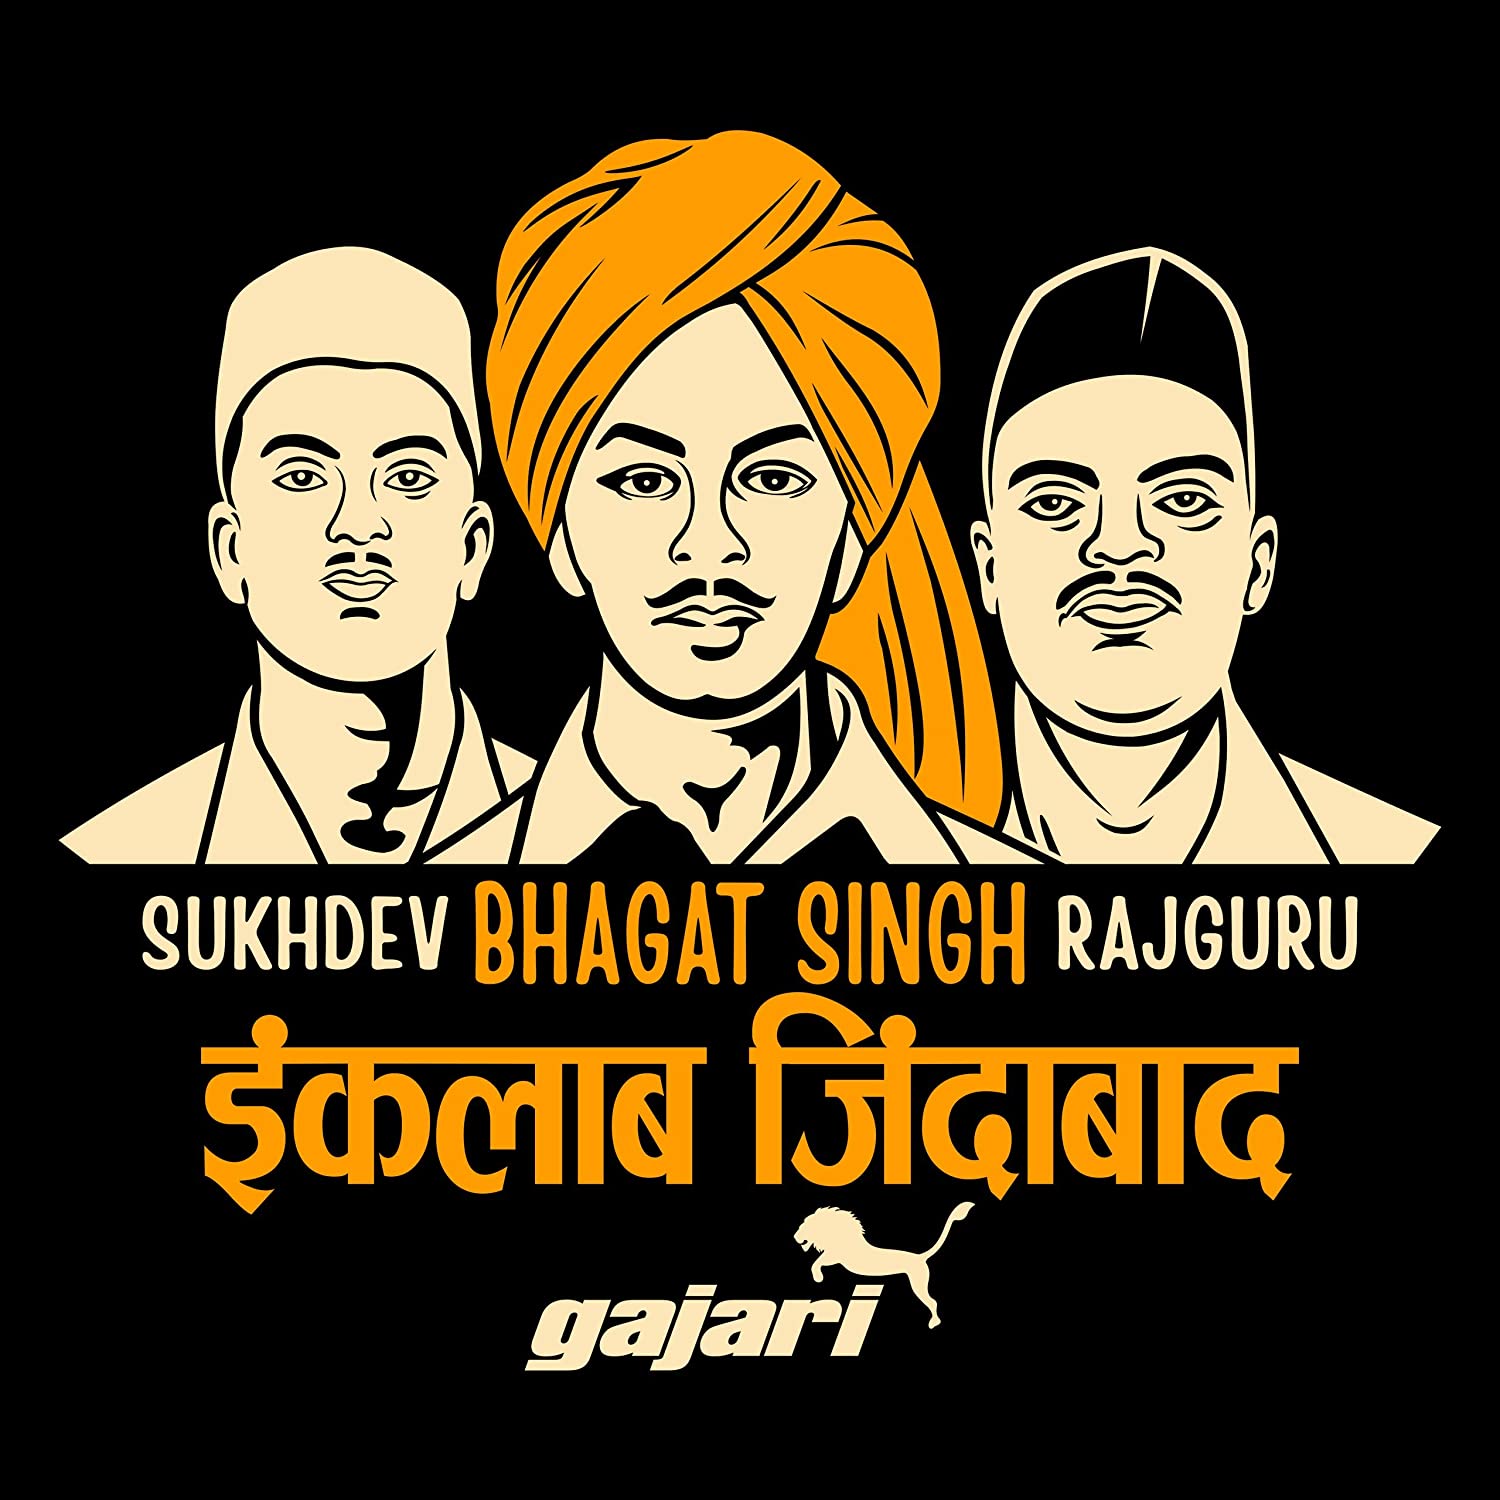 Buy GAJARI Men's Bhagat Singh Rajguru Sukhdev Printed T Shirt, 100% Cotton Built, Half Sleeve, Black Color, Regular Fit, Pack Of 1 (Large) At Amazon.in